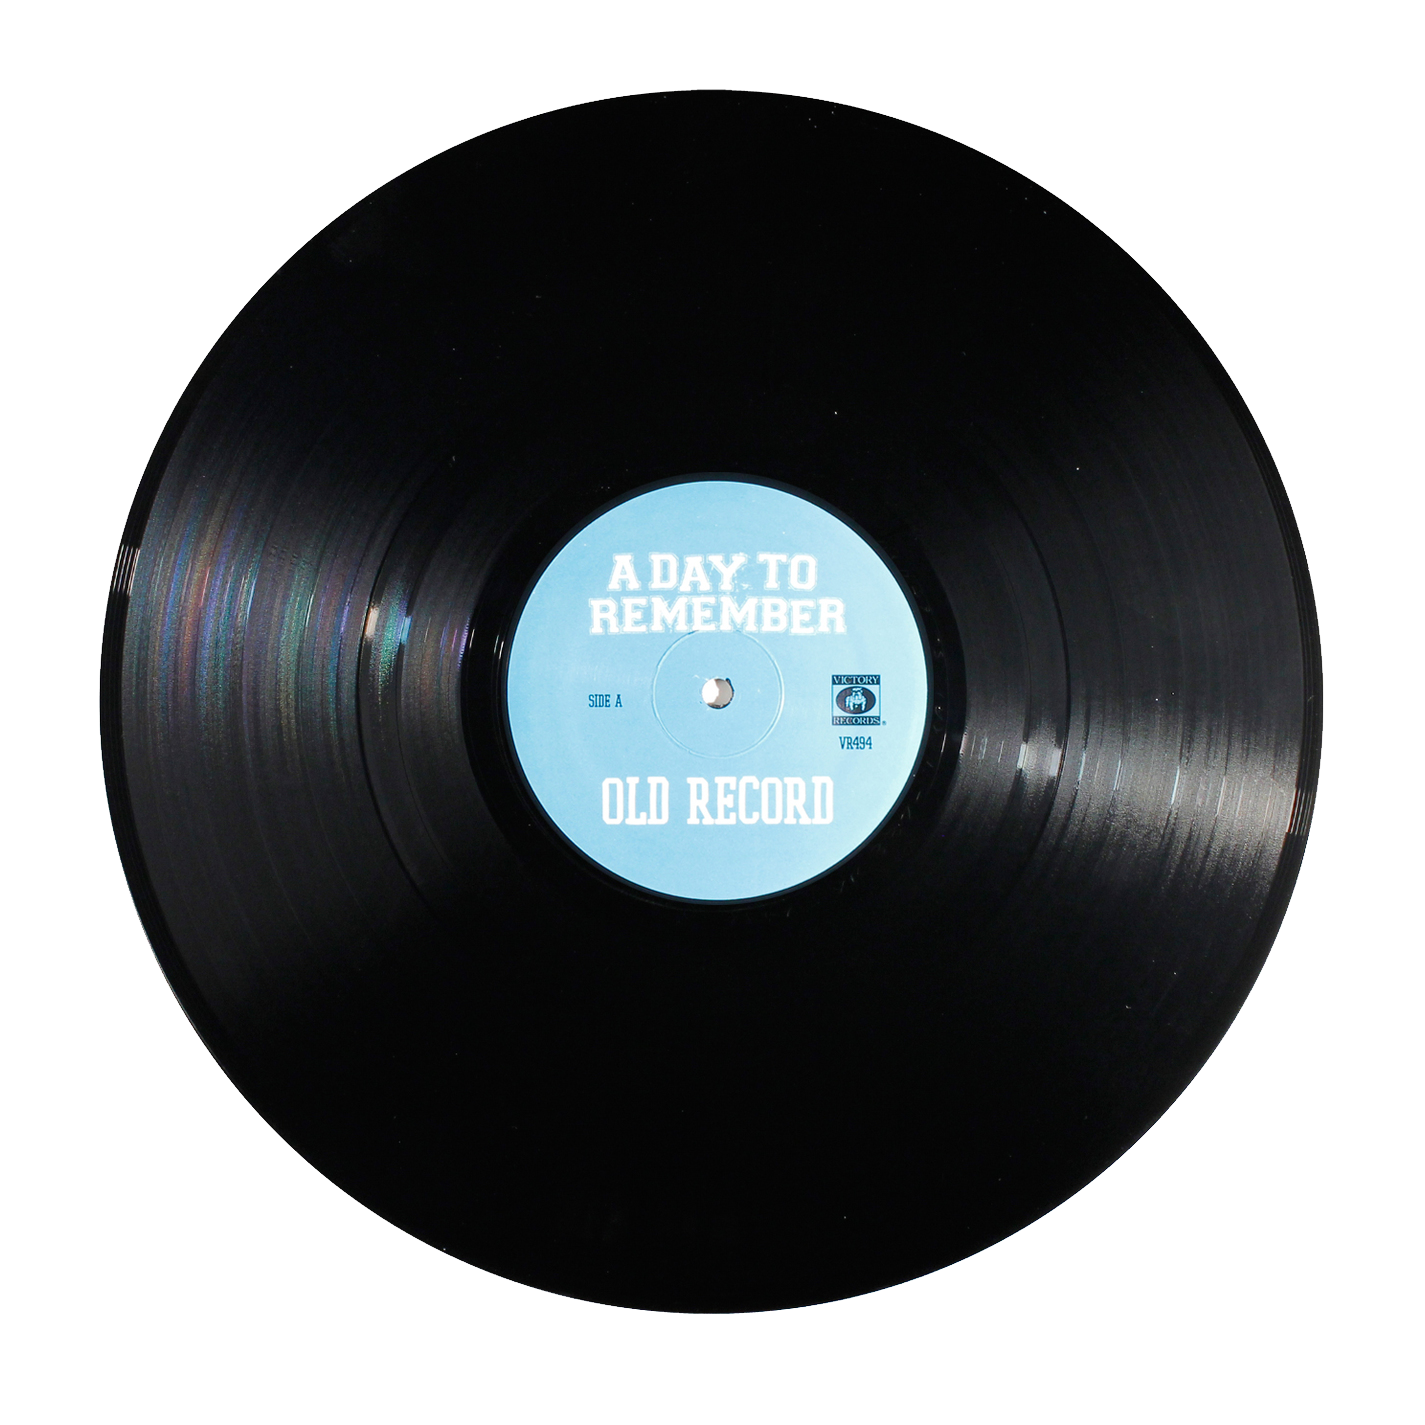 Vinyl Record Transparent Image